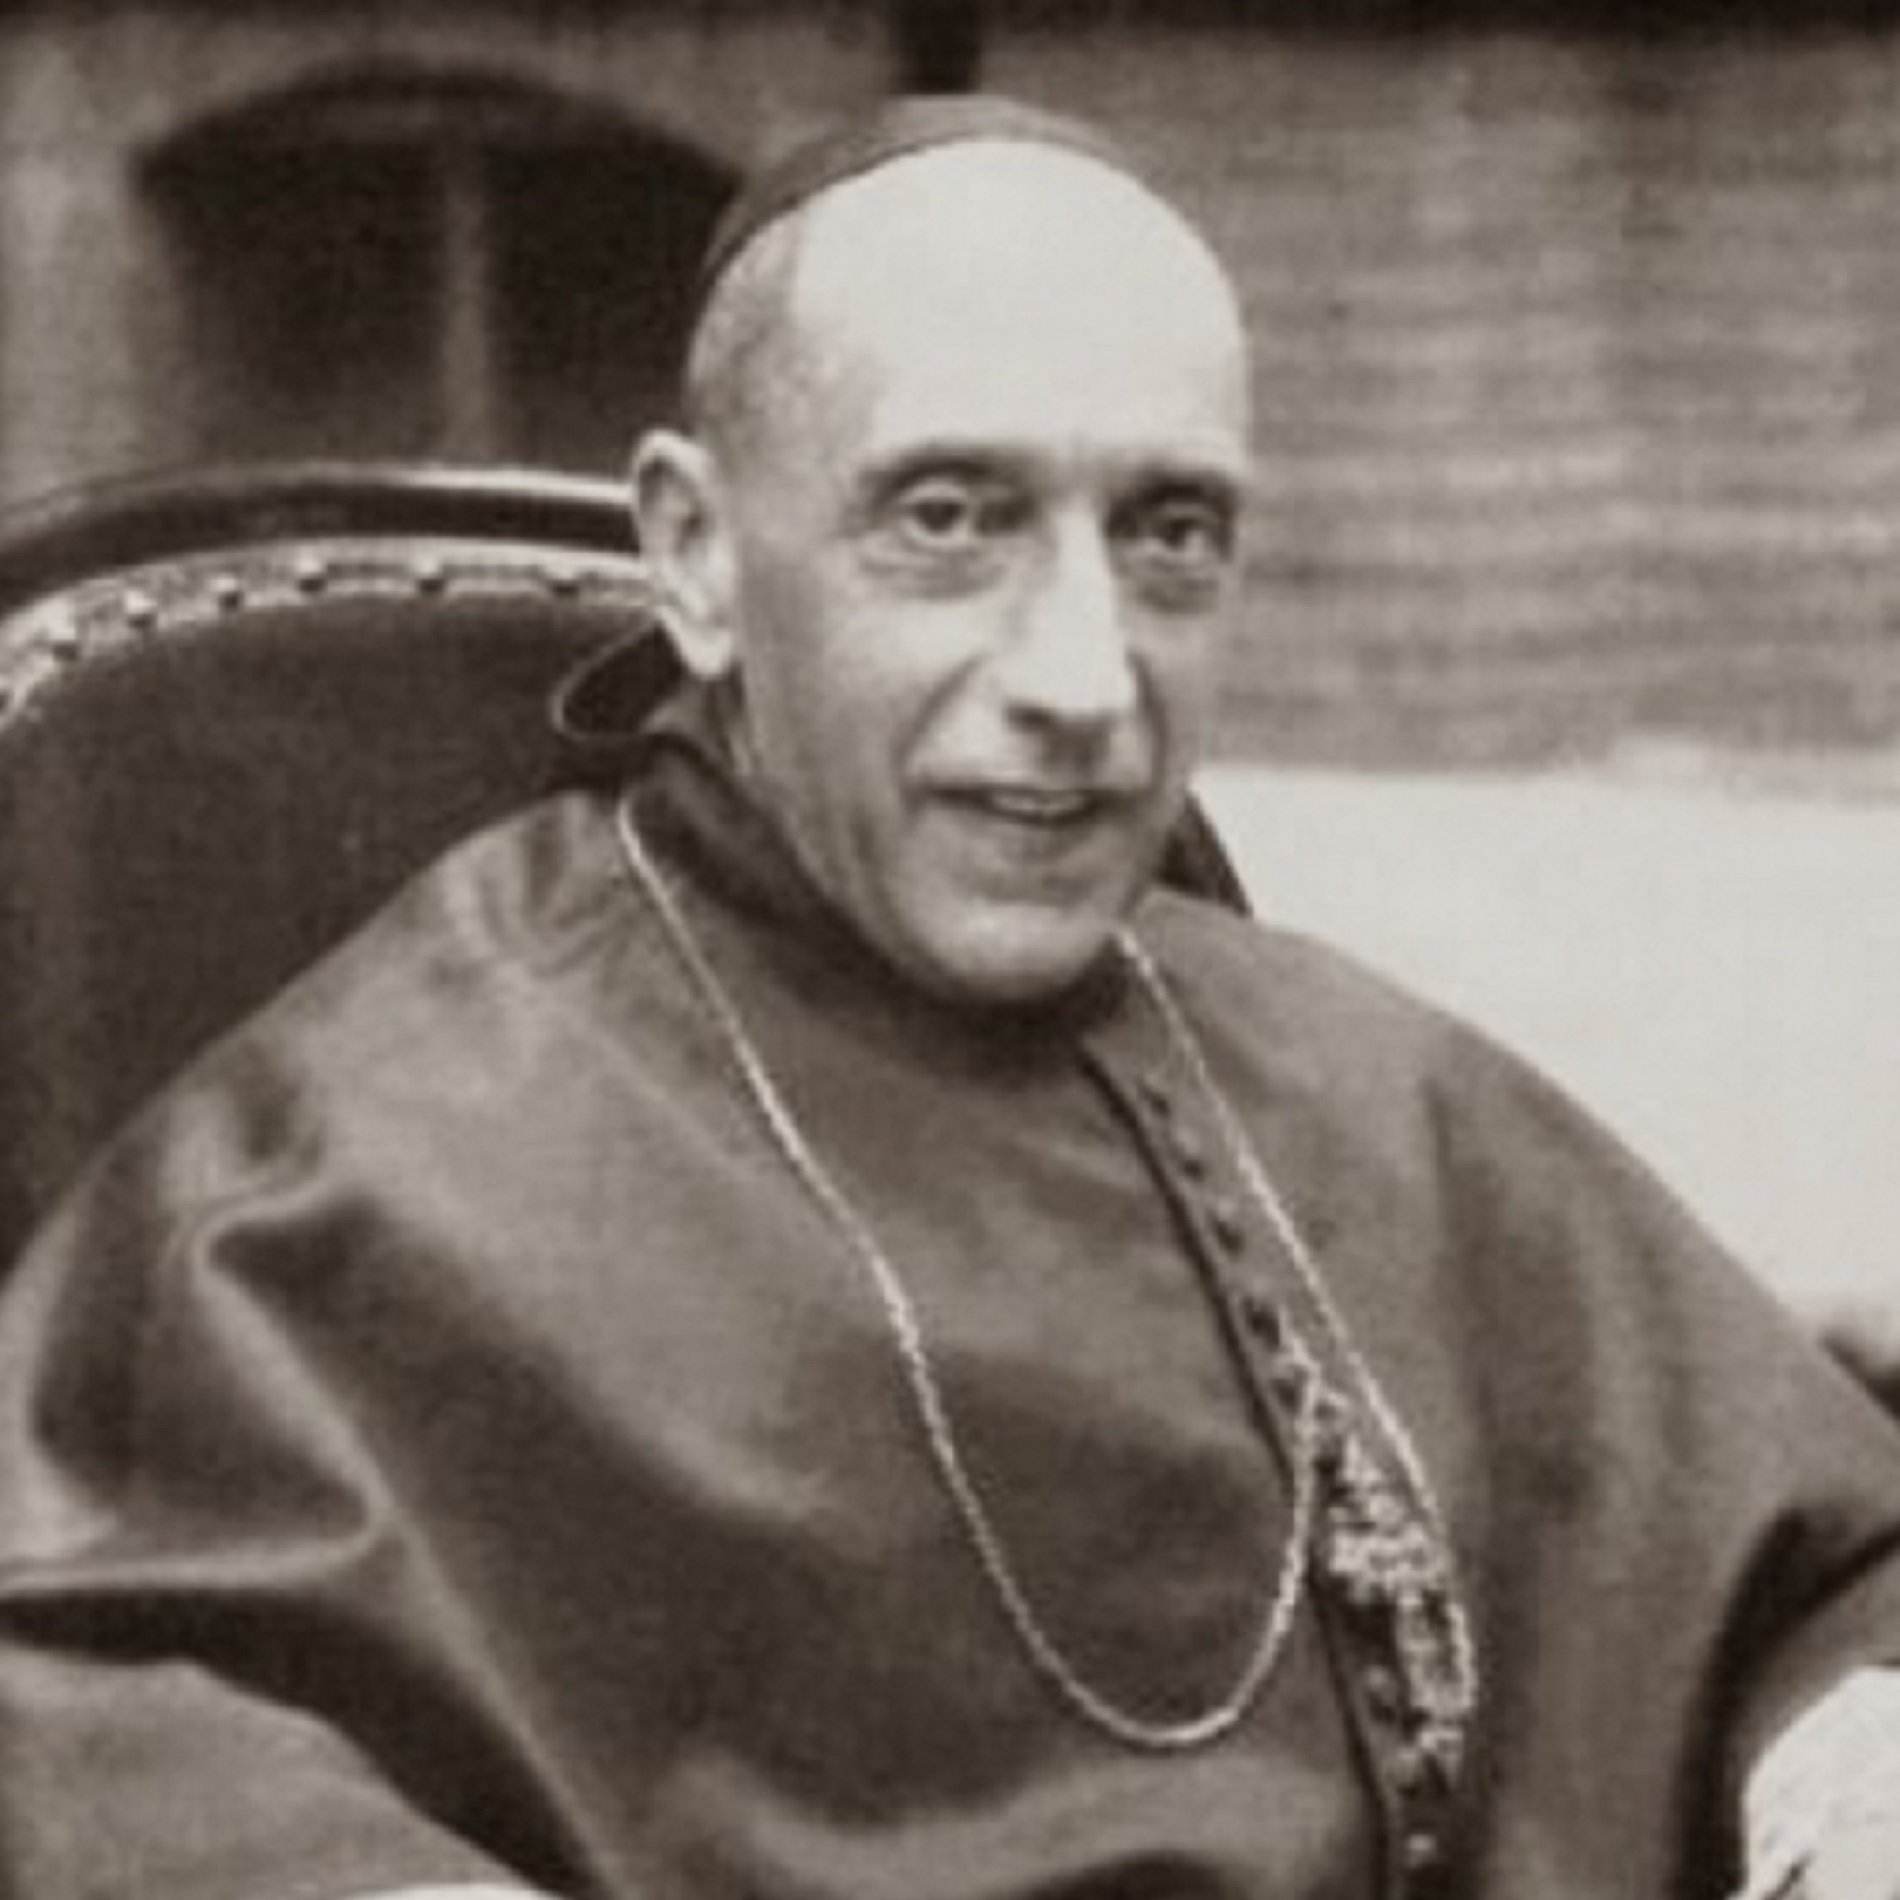 Muere en el exilio Vidal i Barraquer, el cardenal que plantó cara a Franco